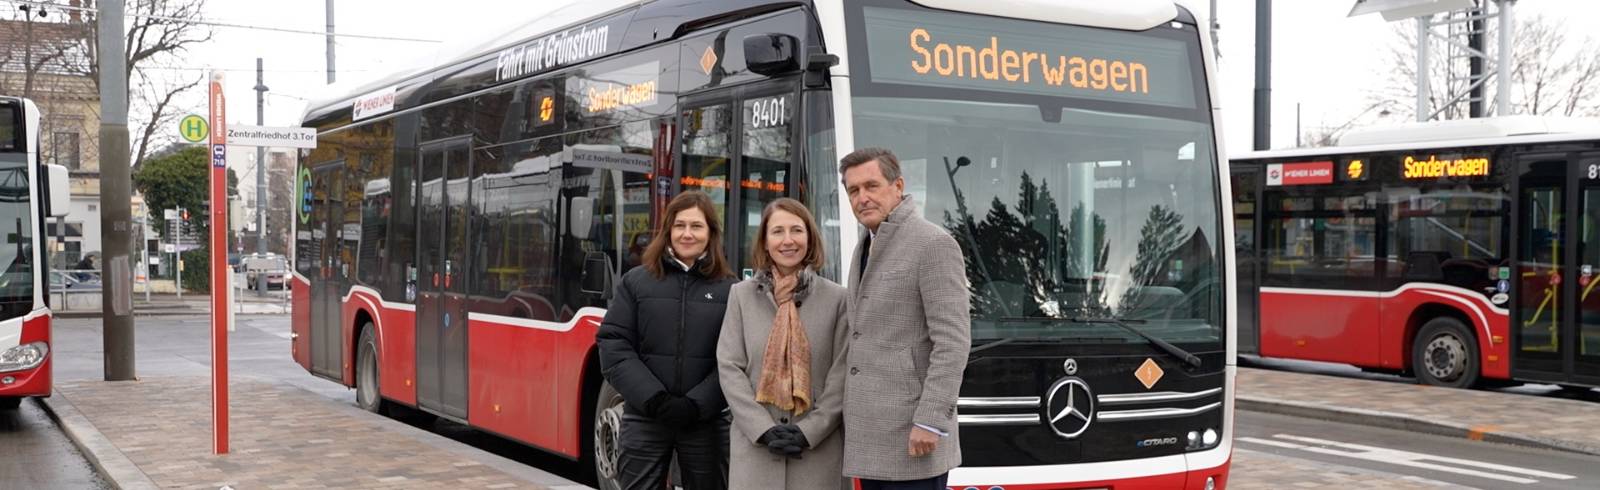 Wiener Linien starten E-Bus-Probebetrieb